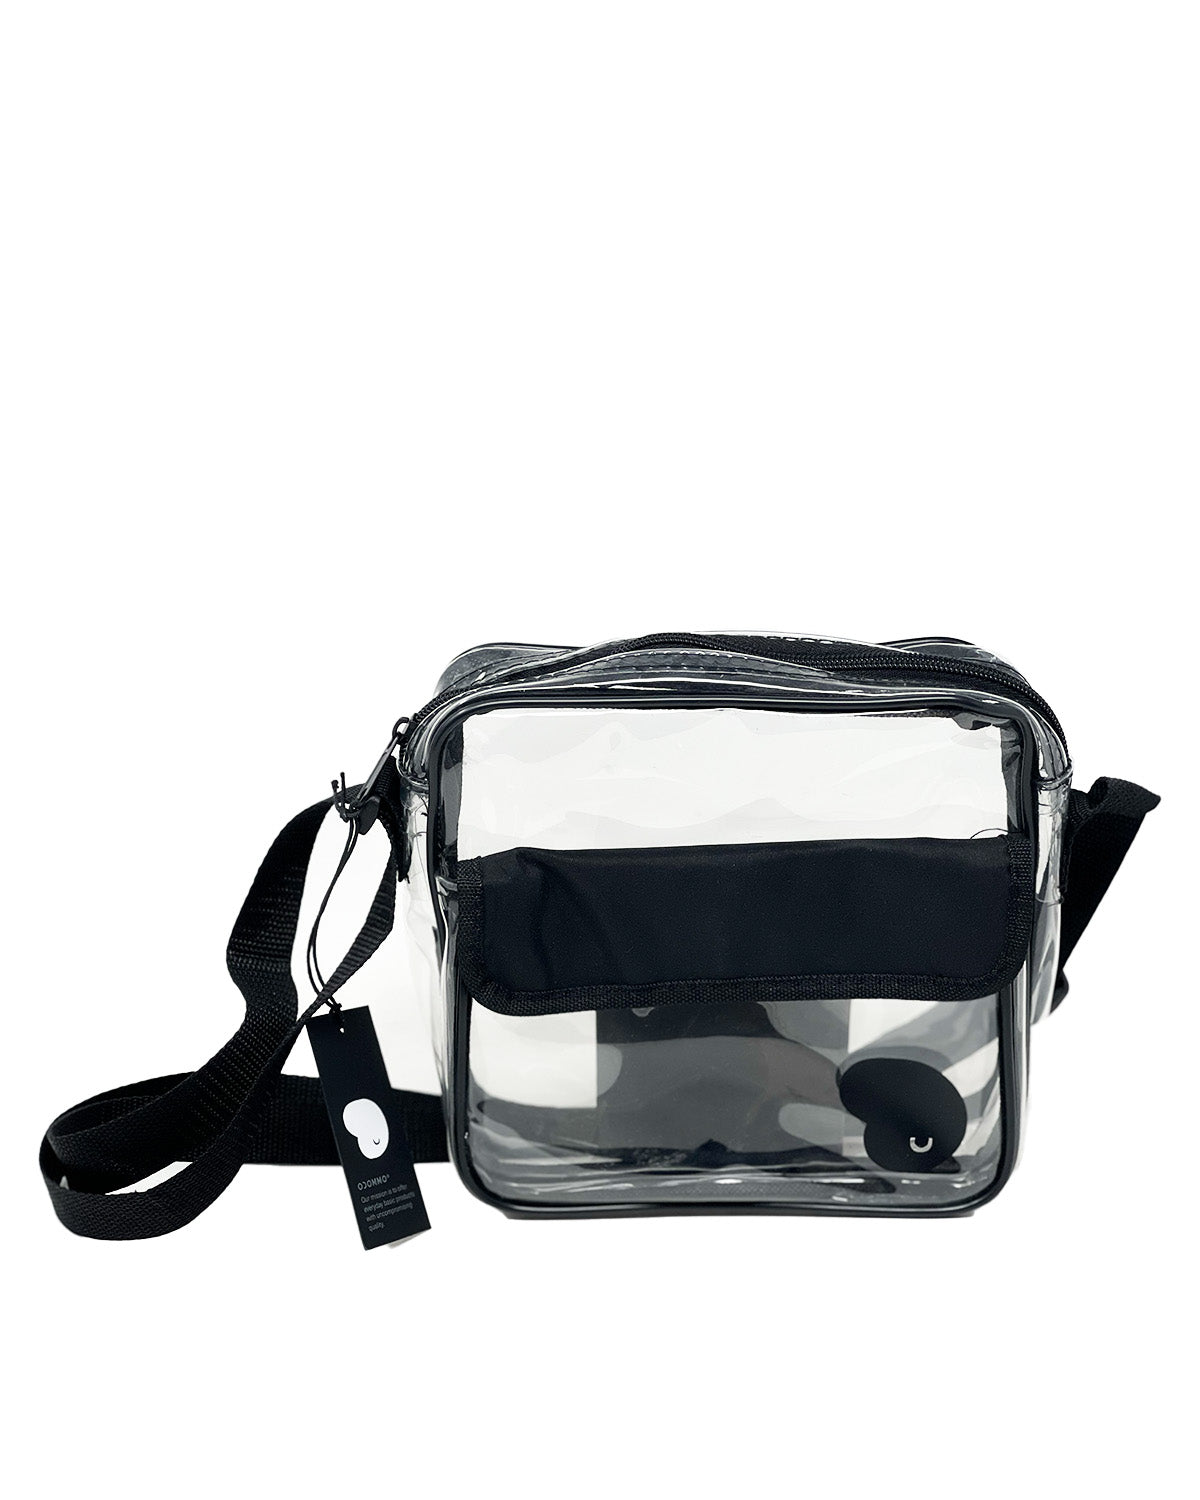 OCOMMO Clear Sidebag